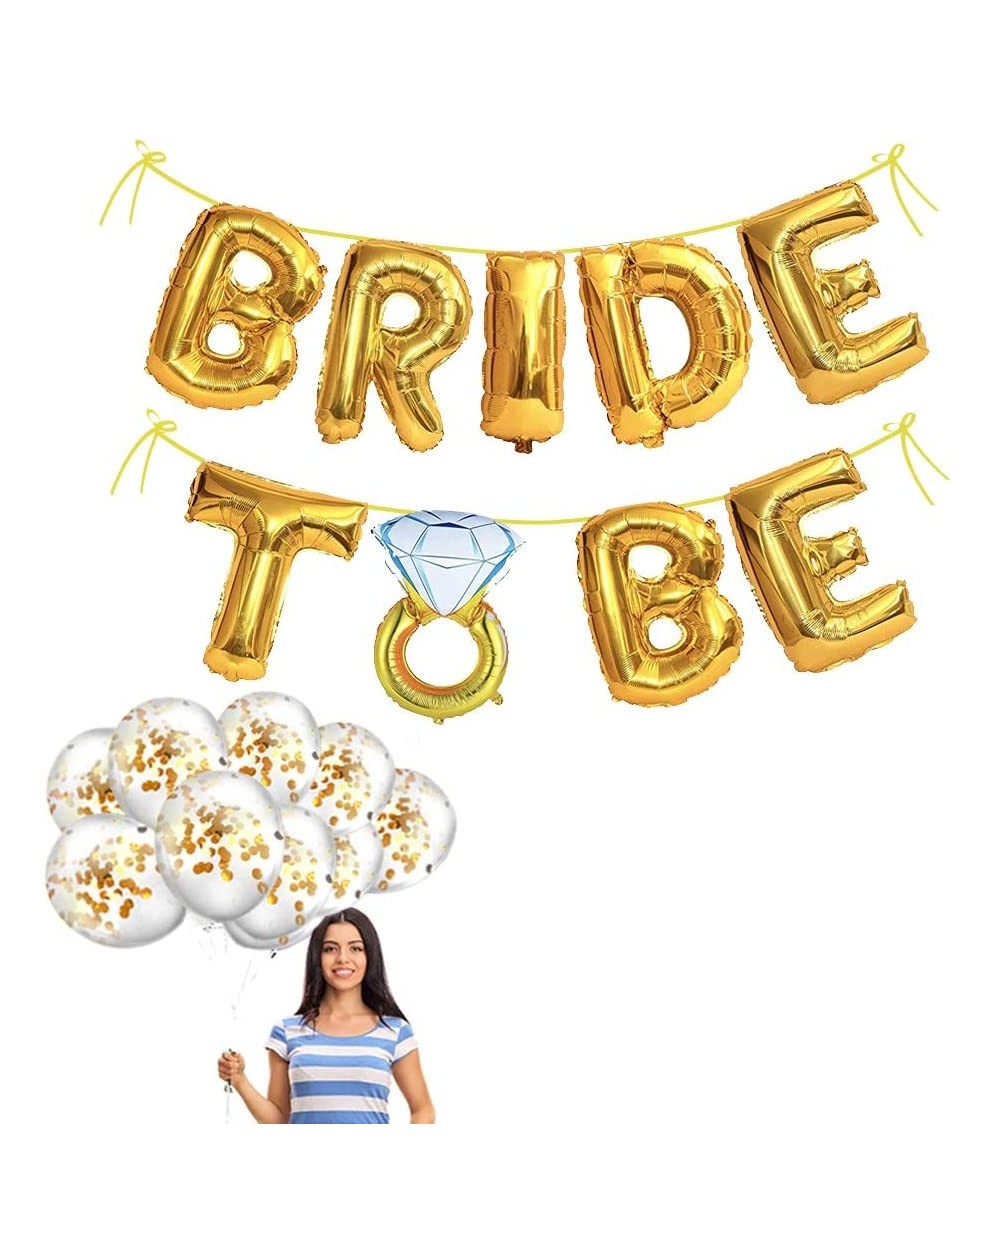 Balloons Bachelorette Party Decorations - Bride to Be Balloons Kit - 16" Gold Bride to Be Foil Balloons for Bride shower Supp...